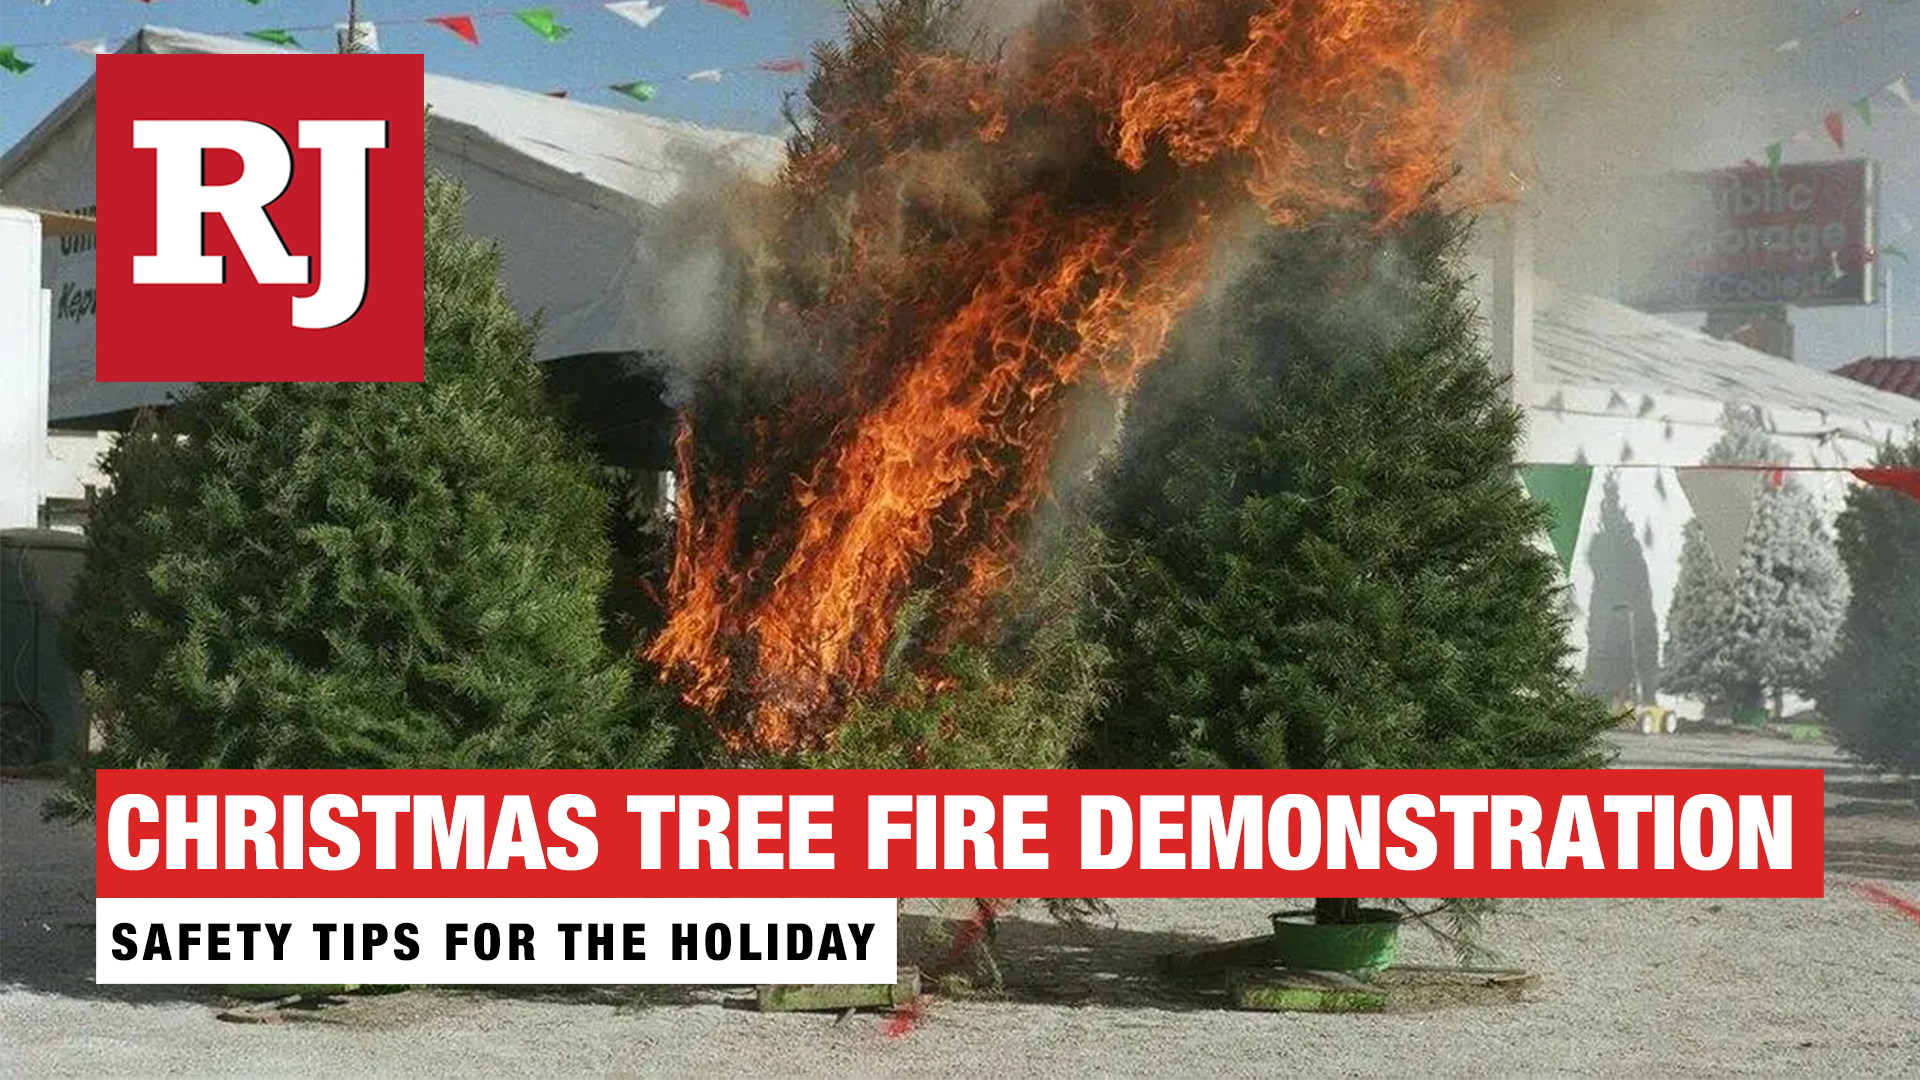 Christmas Tree fire demonstration